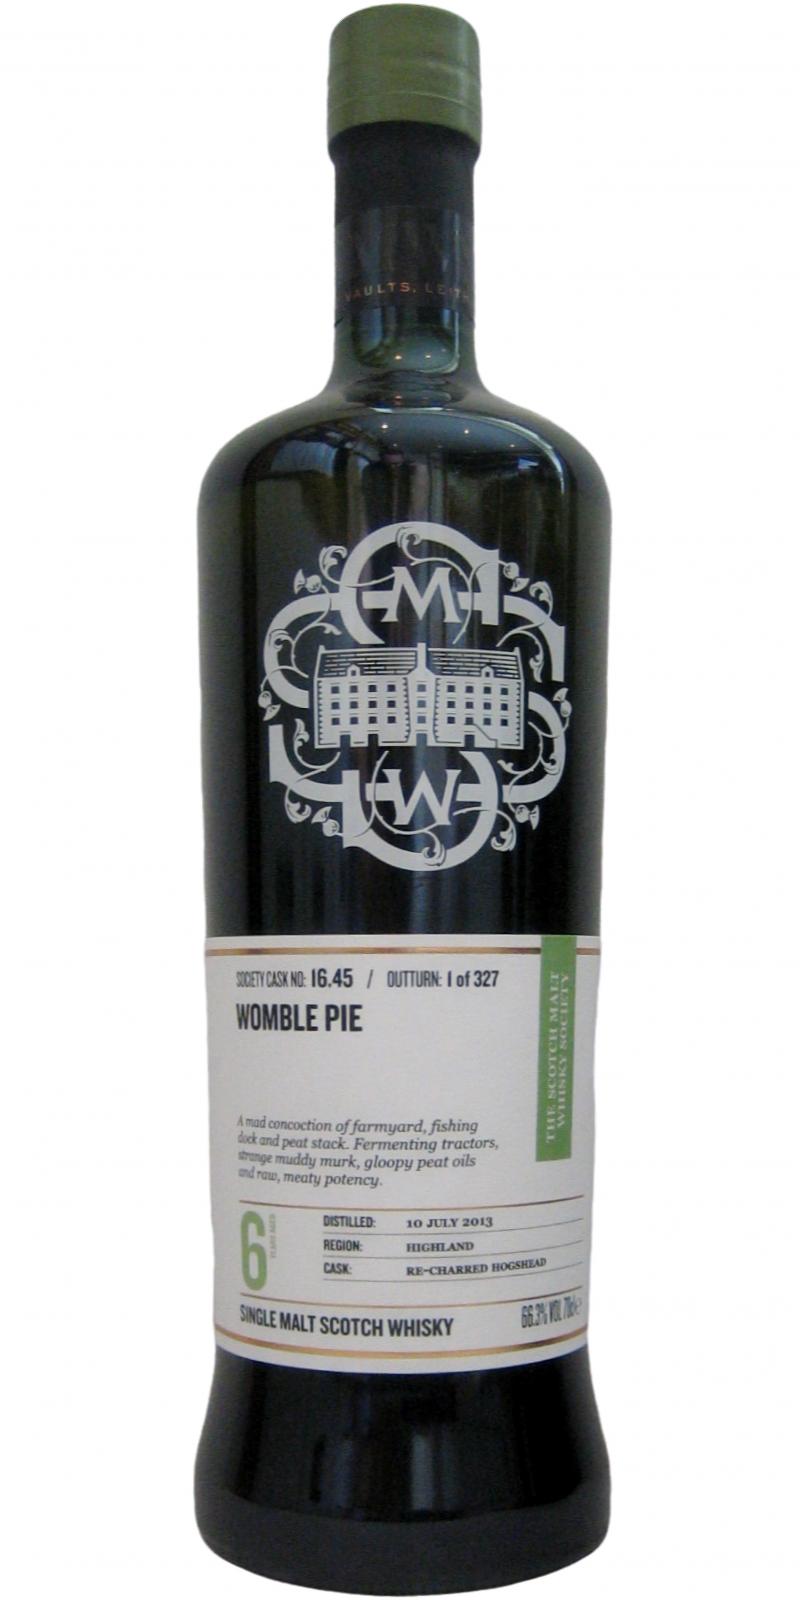 Glenturret 2013 SMWS 16.45 Womble pie Re-charred hogshead 66.3% 700ml